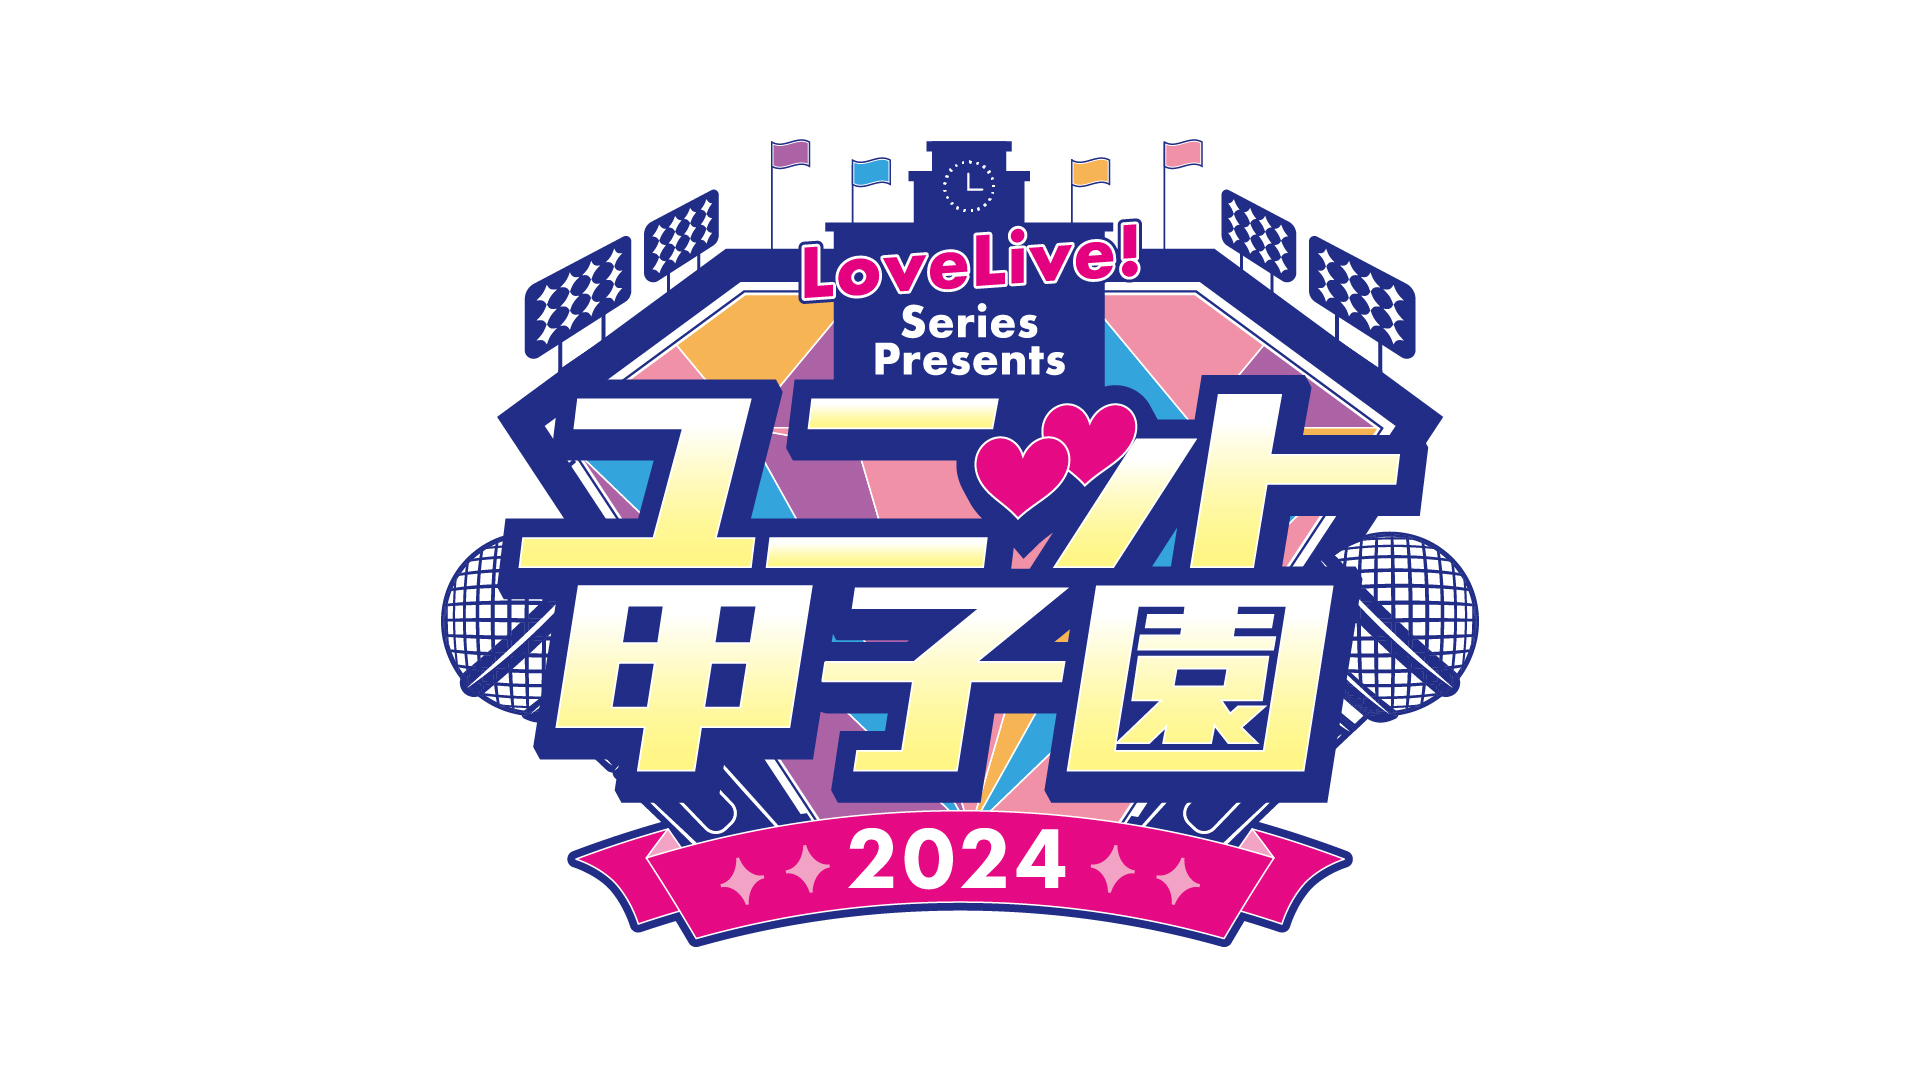 LoveLive! Series Presents ユニット甲子園 2024 - blur